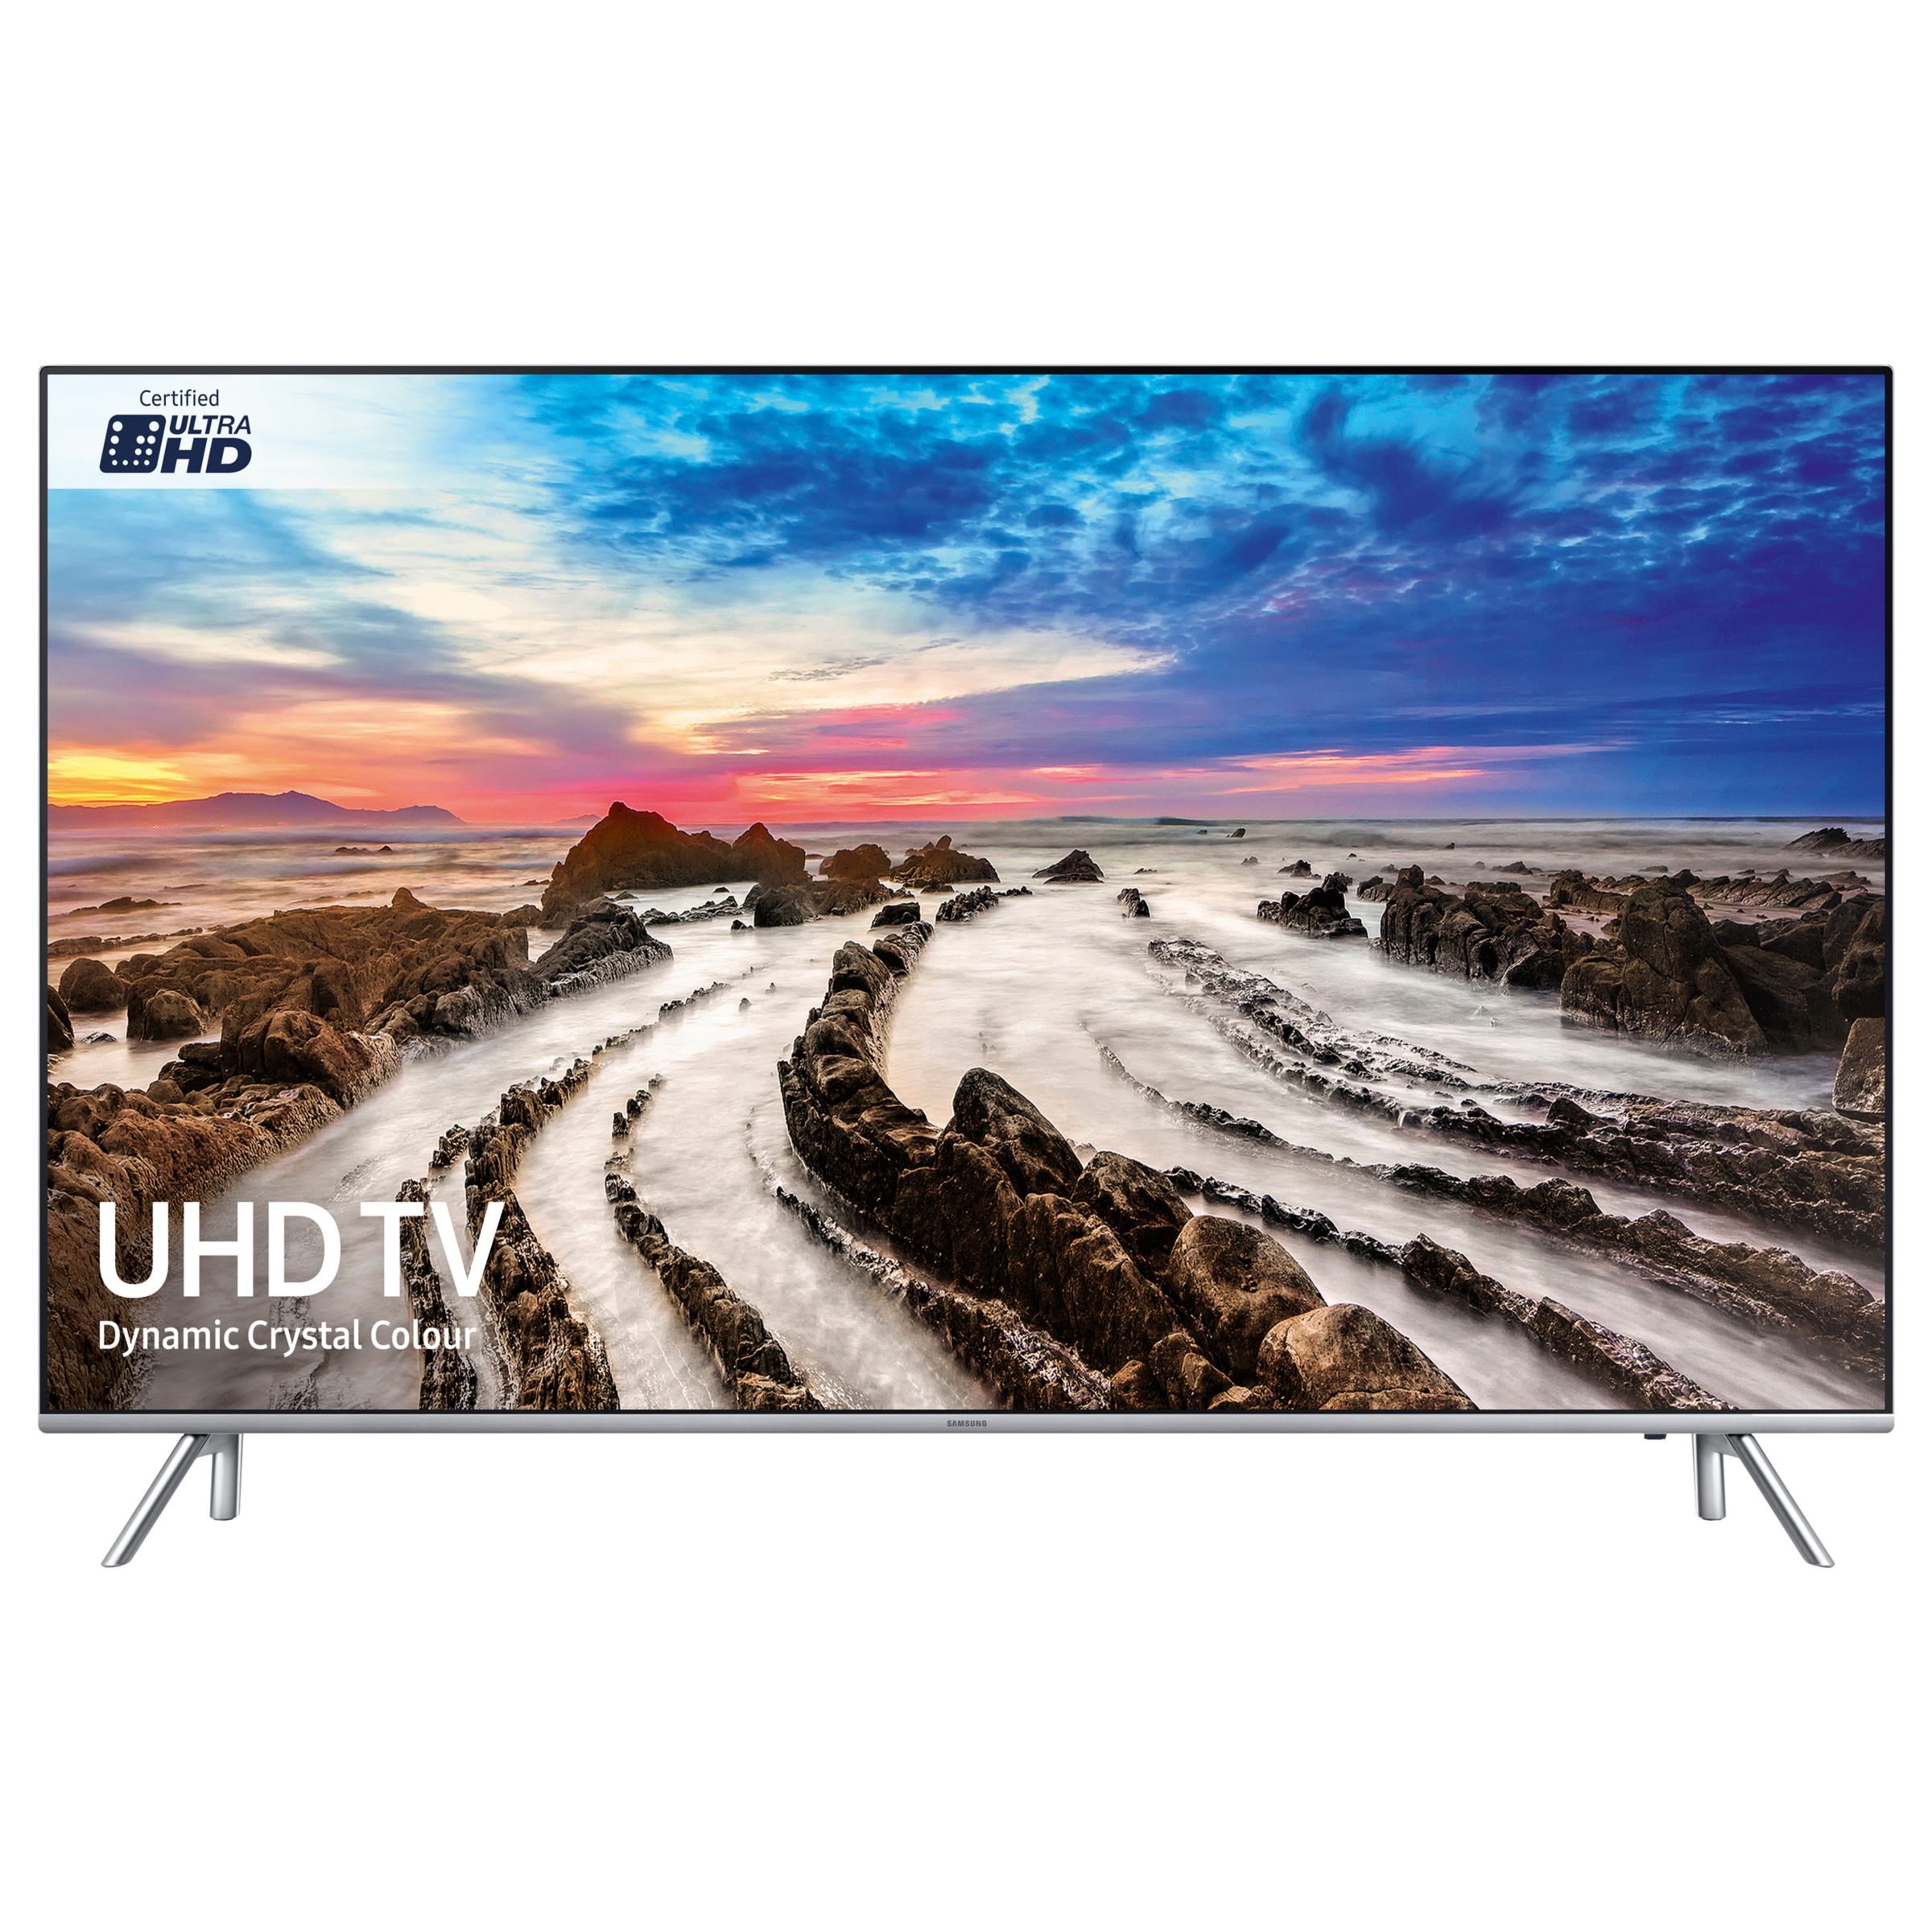 Samsung UE75MU7000 HDR 4K Ultra HD Smart TV, 75" with TVPlus/Freesat HD, Dynamic Crystal Colour & 360 Design, Ultra HD Certified, Silver